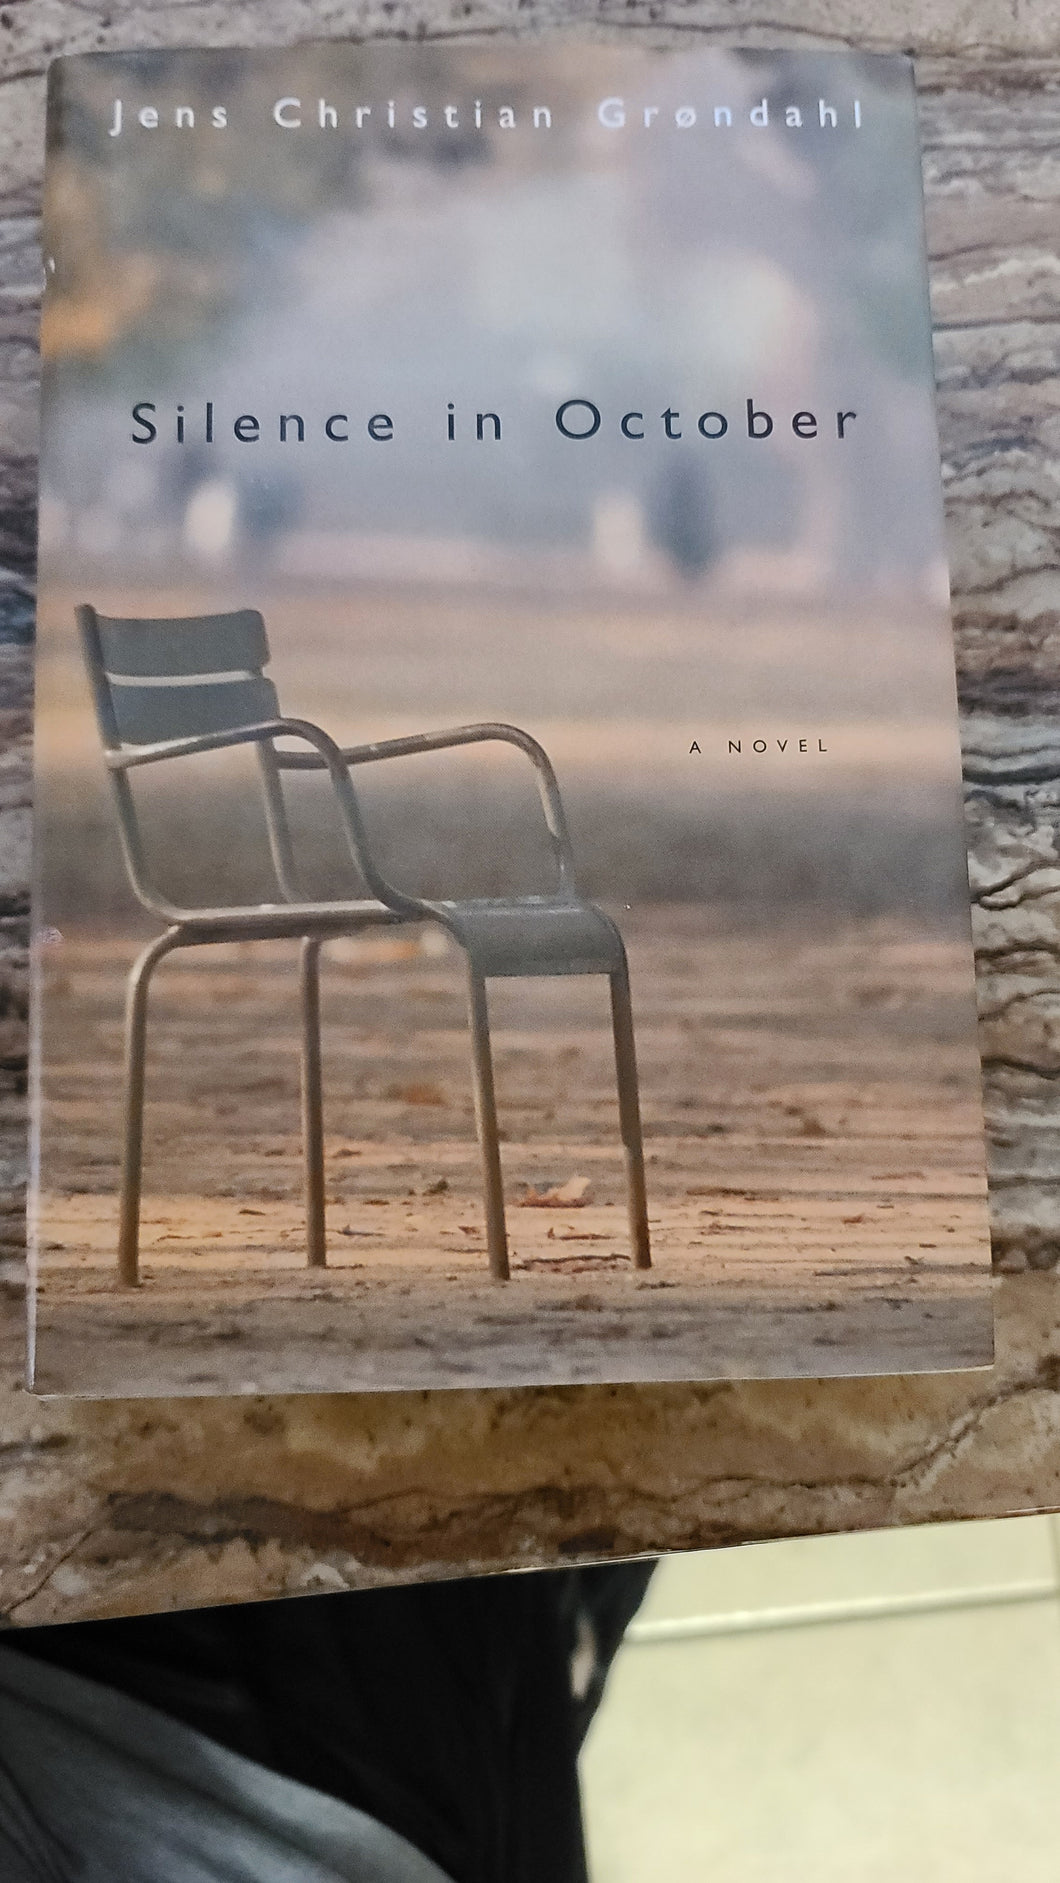 Silence in October